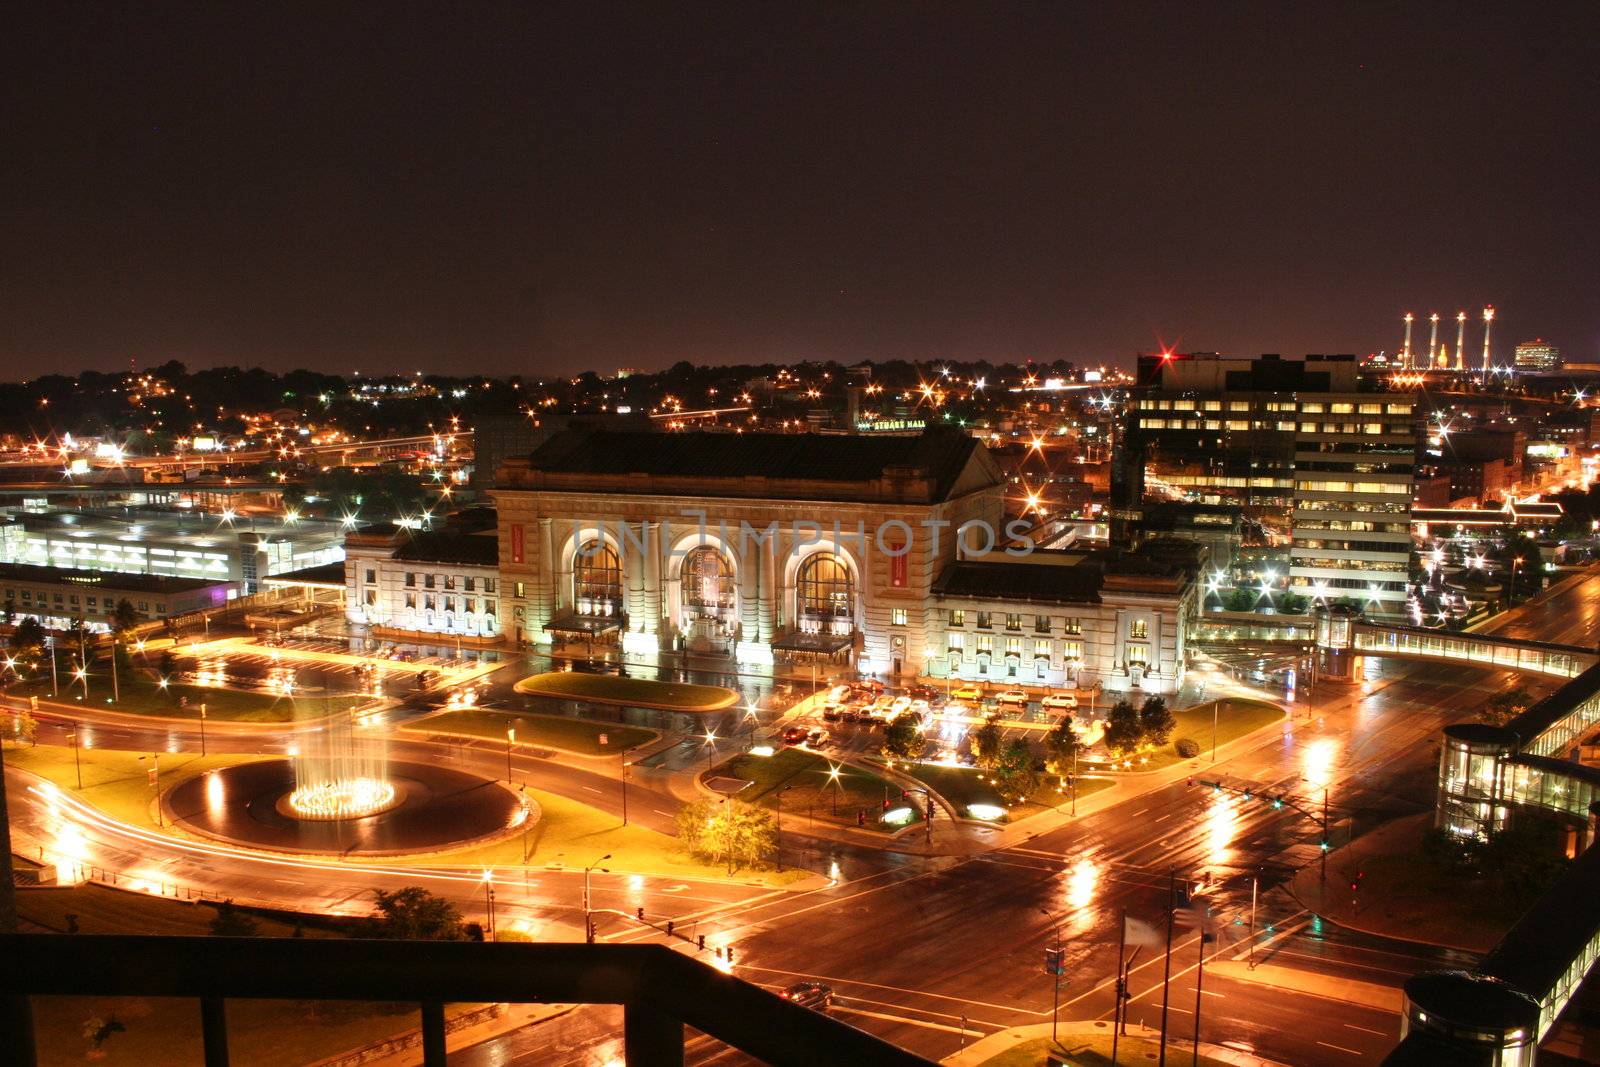 Kansas City Union Station at night by ronlan